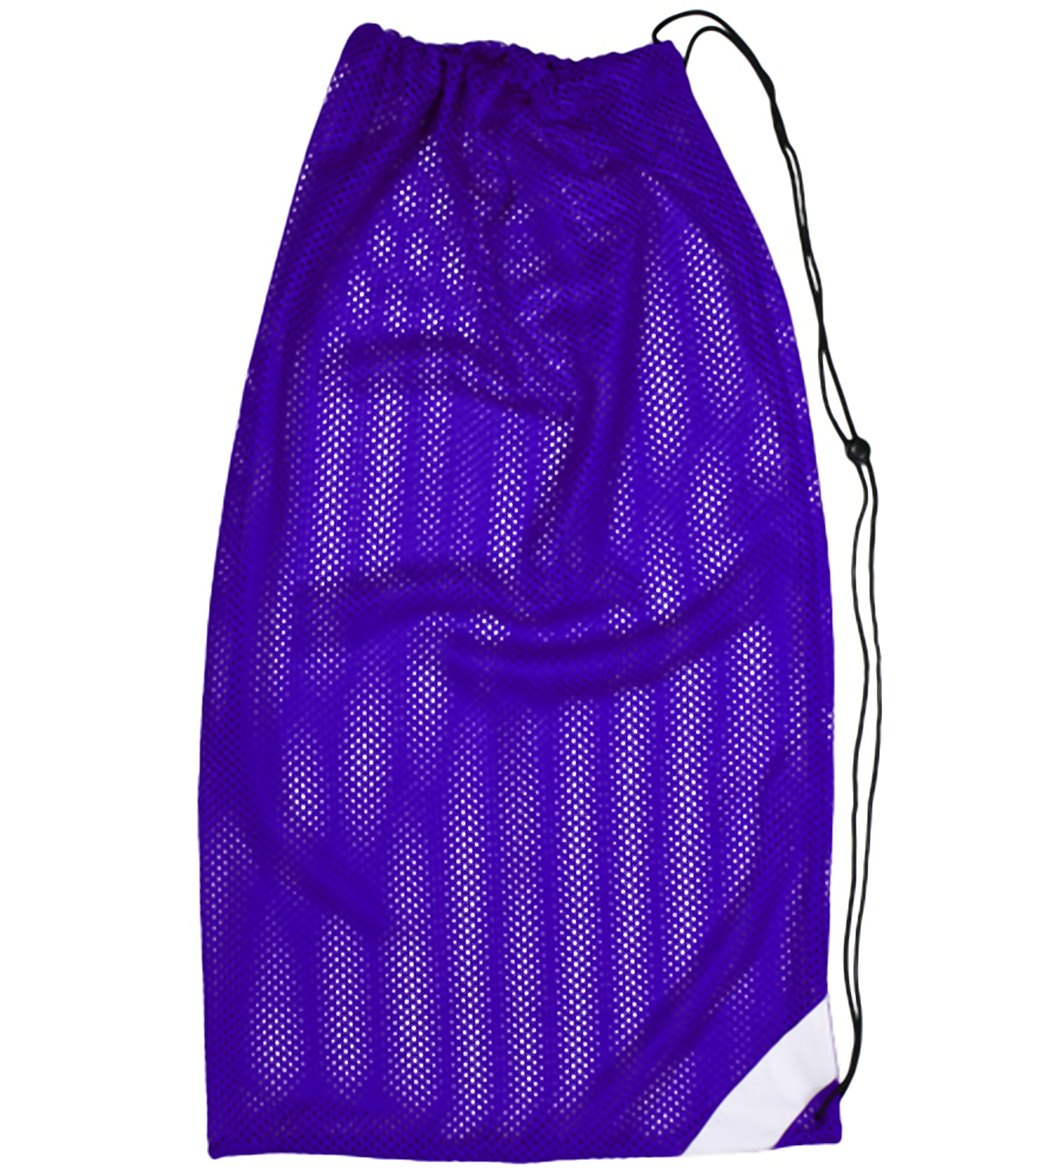 Bettertimes Mesh Bag - Purple - Swimoutlet.com